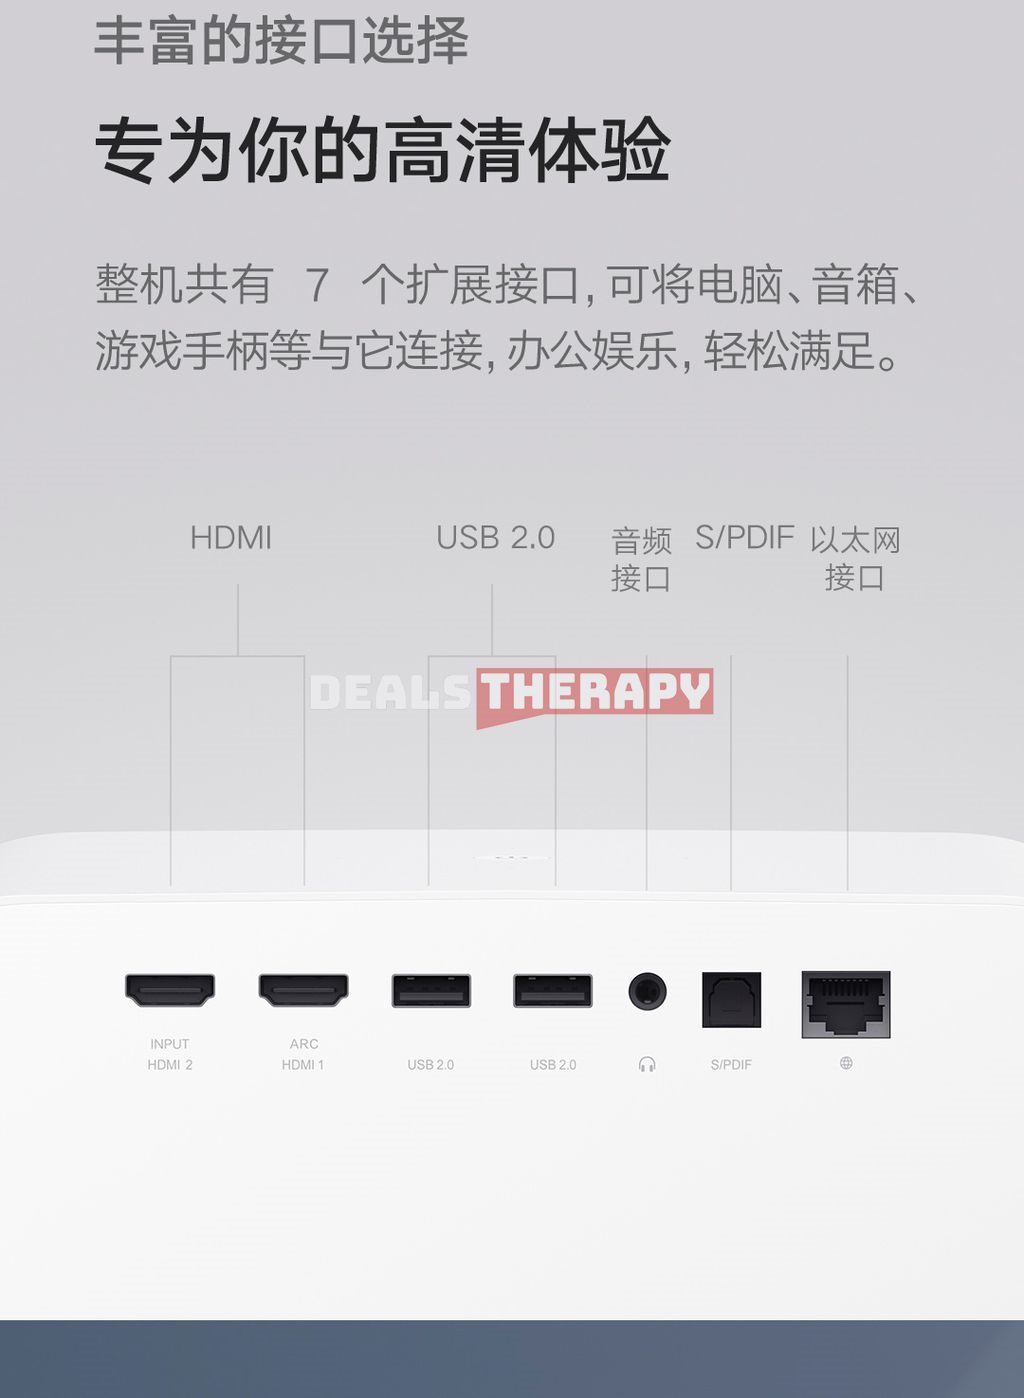 Xiaomi Mijia Projector 2 Pro